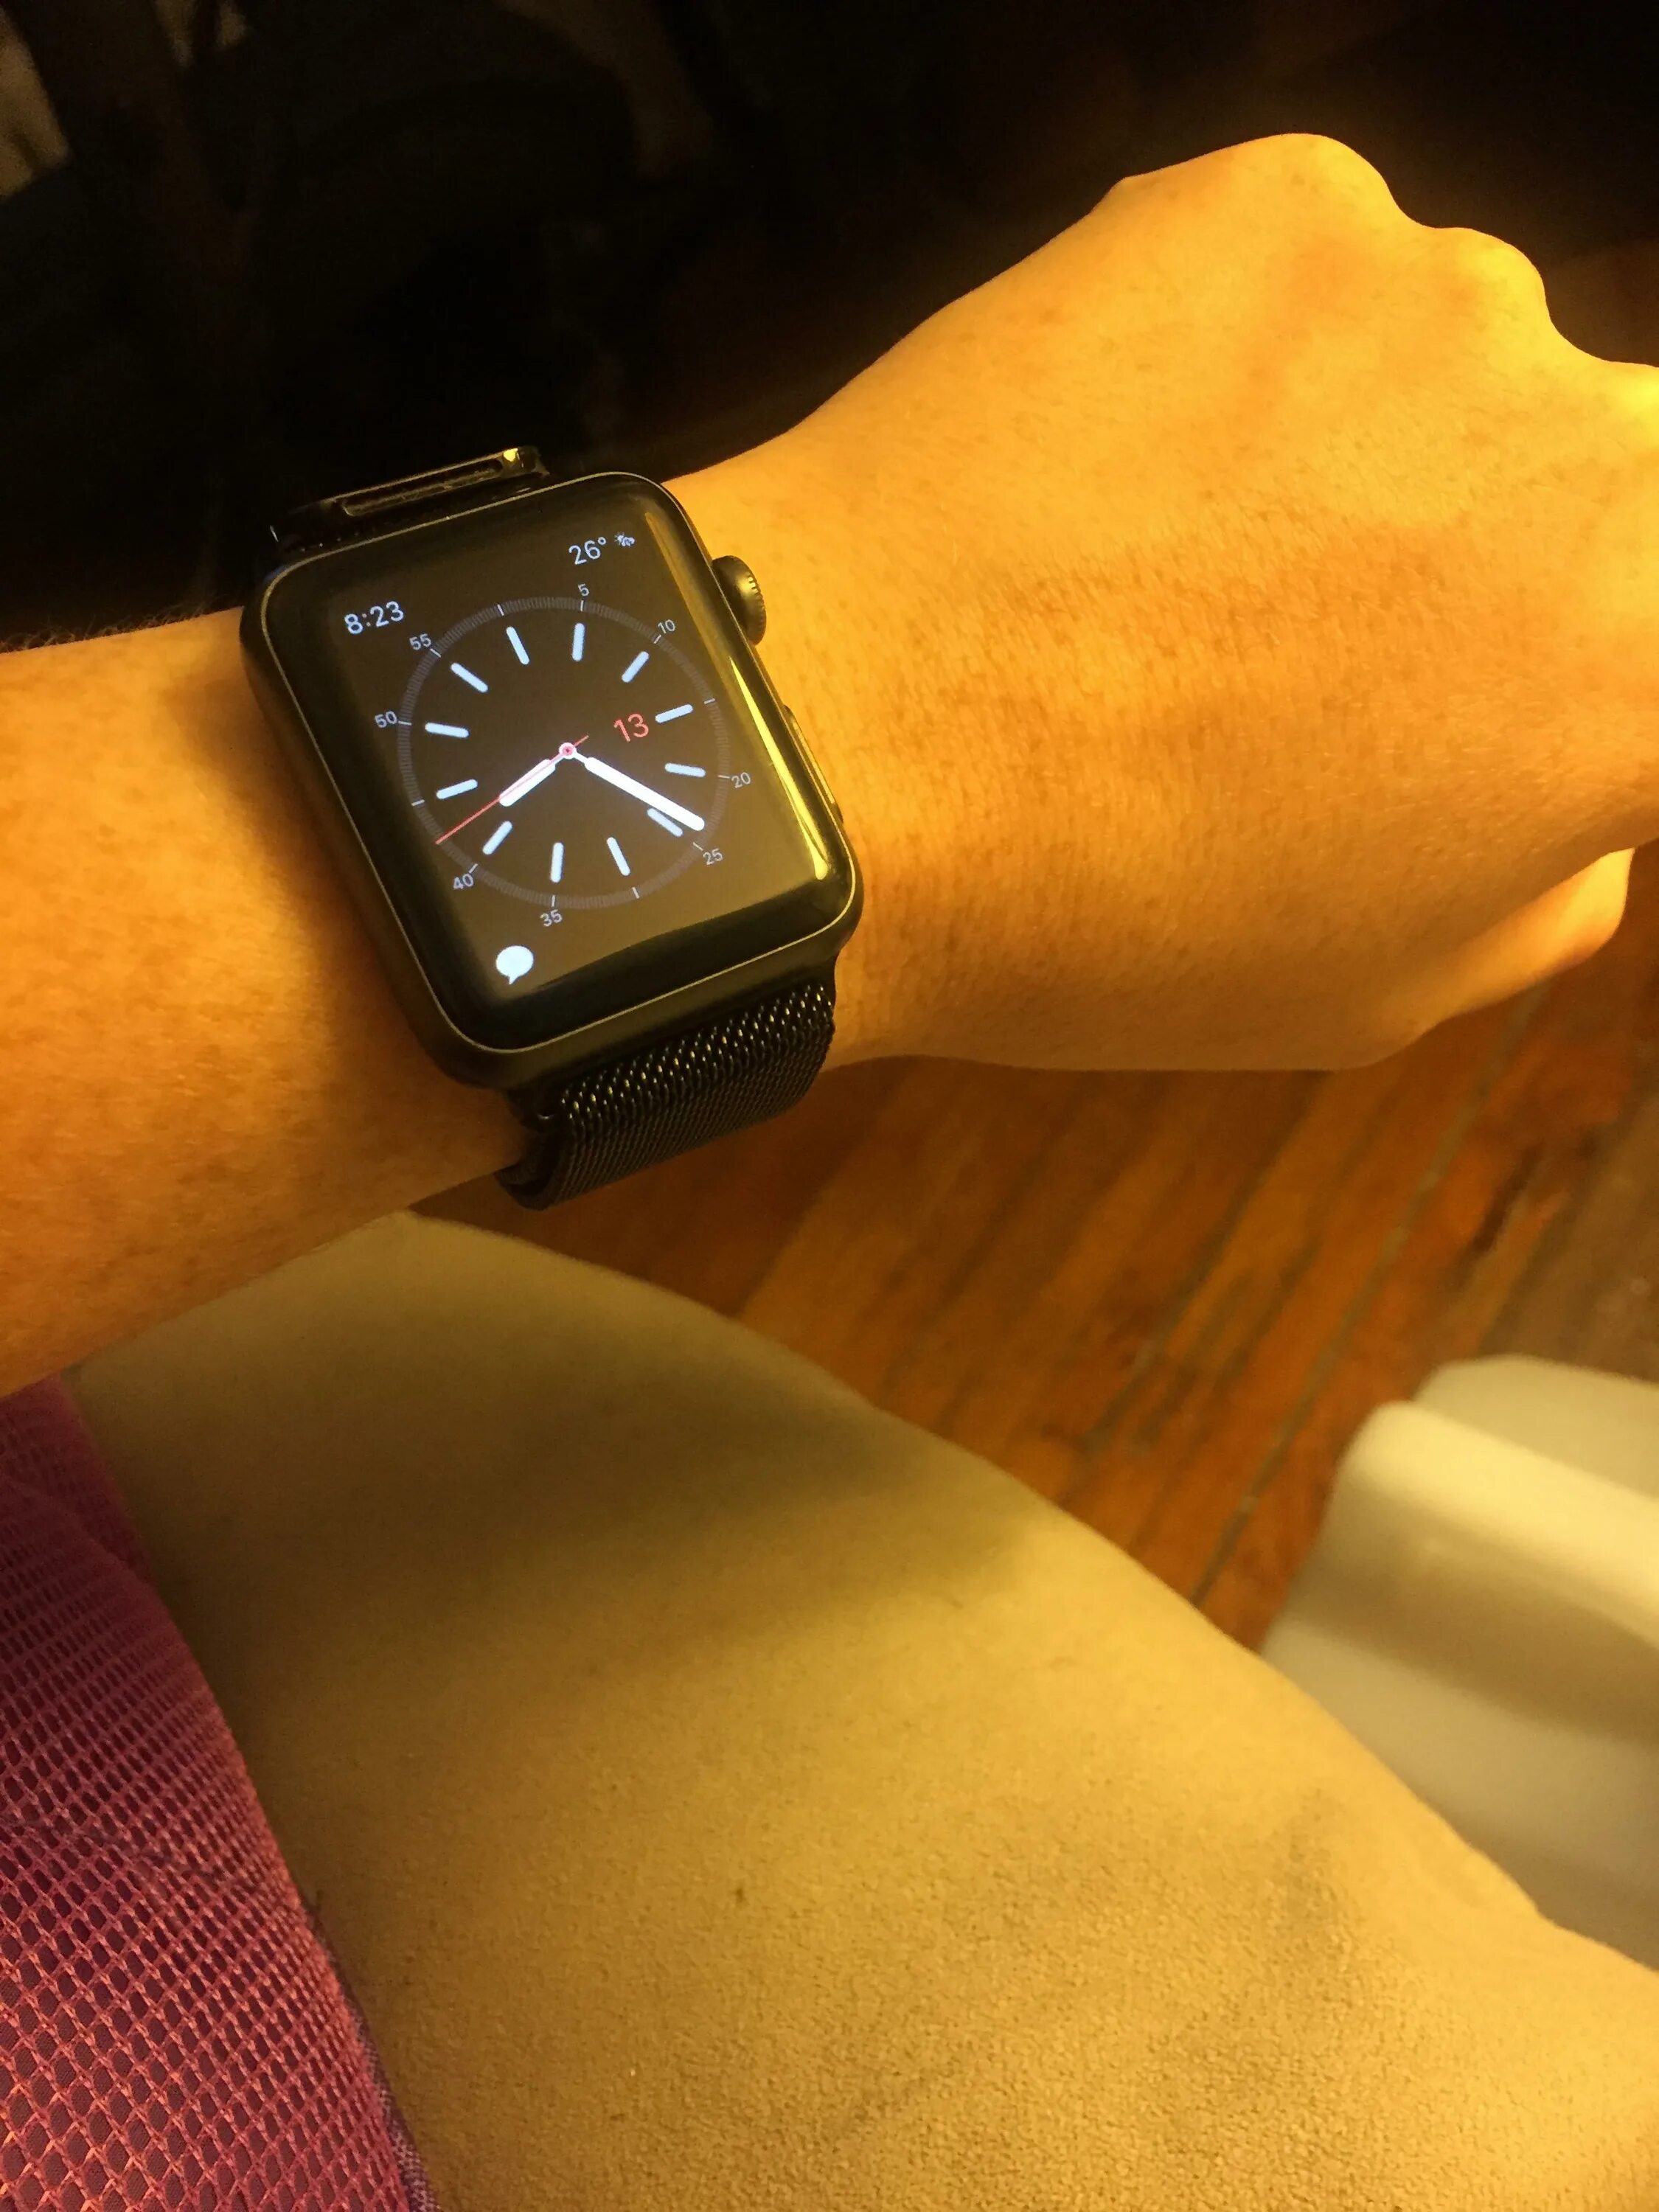 Watch часы 3 42mm. Apple watch 7 42mm. Watch 38 mm Apple watch. Эппл вотч 3 42мм. Эппл вотч 42.